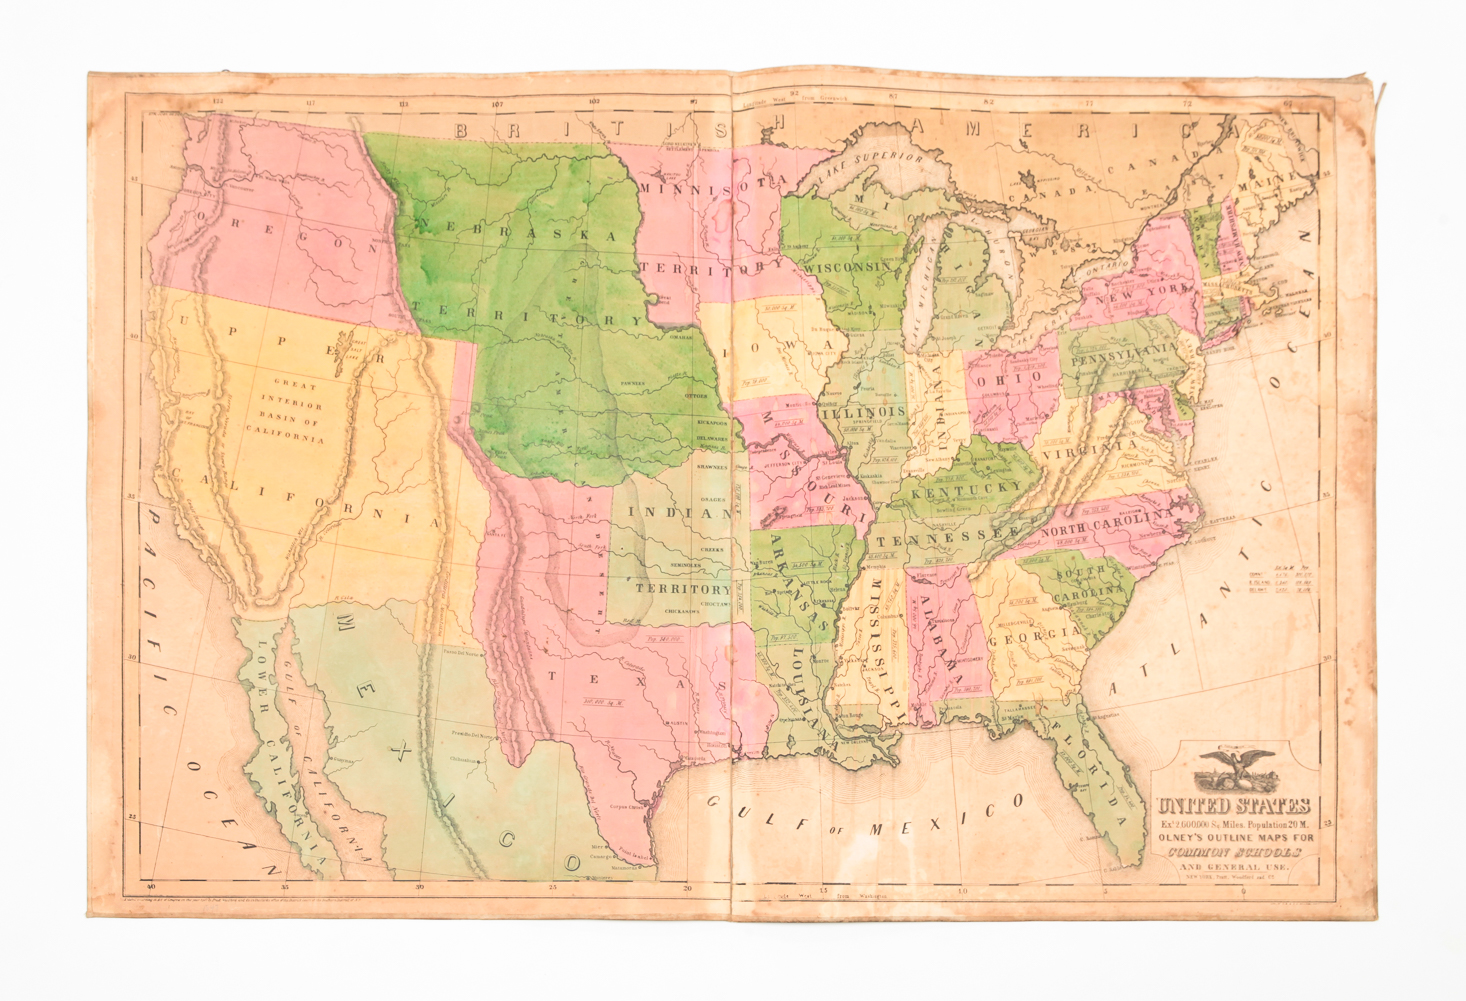 1847 MAP OF UNITED STATES. Published